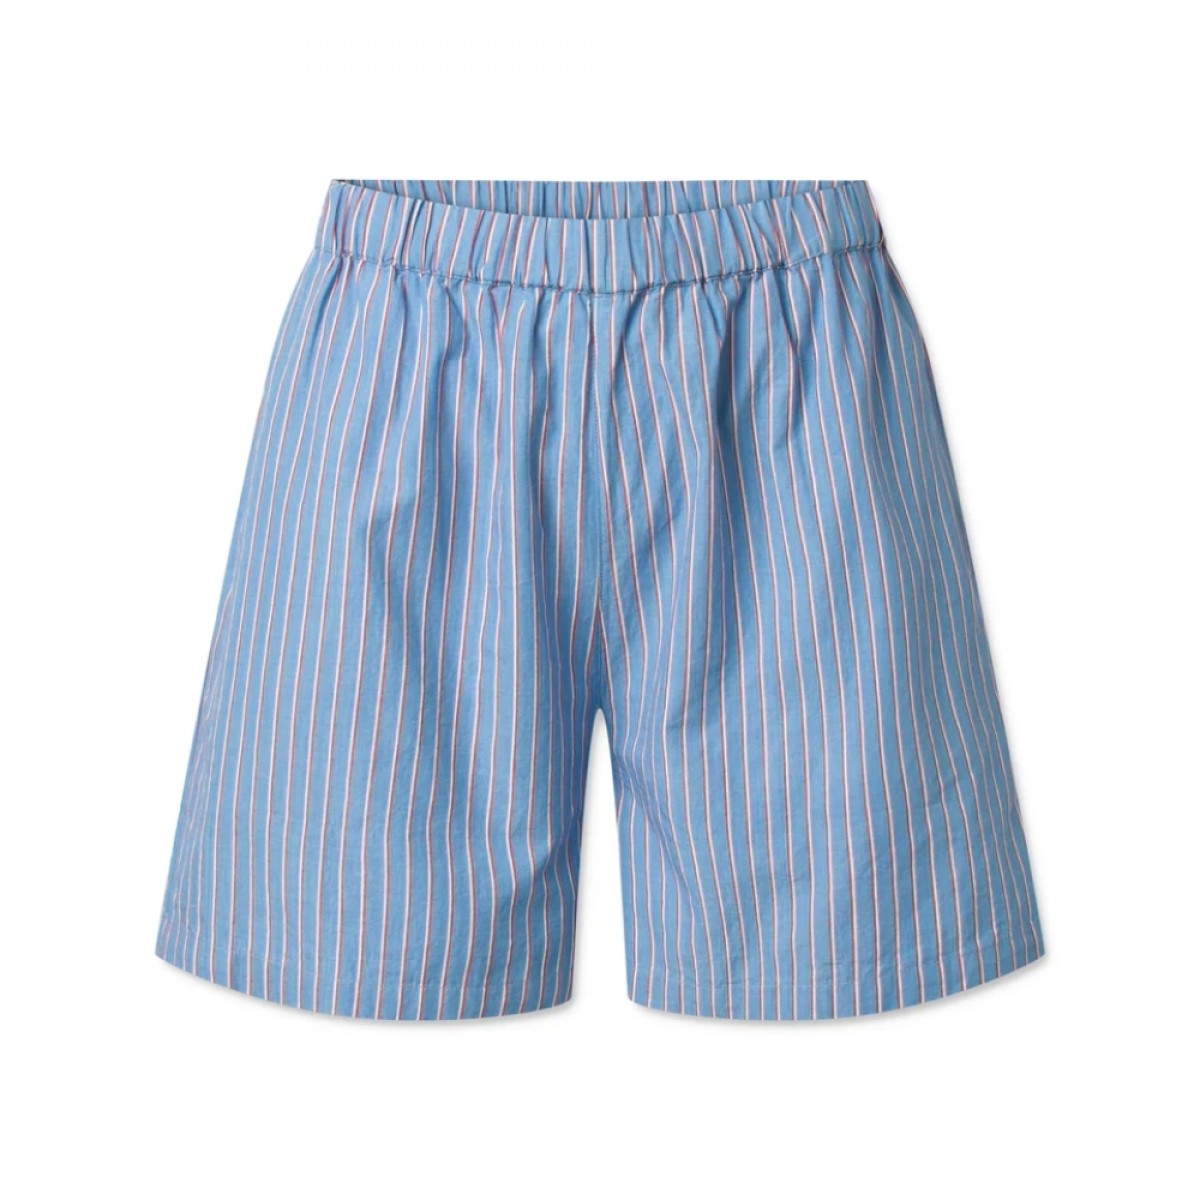 alessandra shorts - blue stripe - front